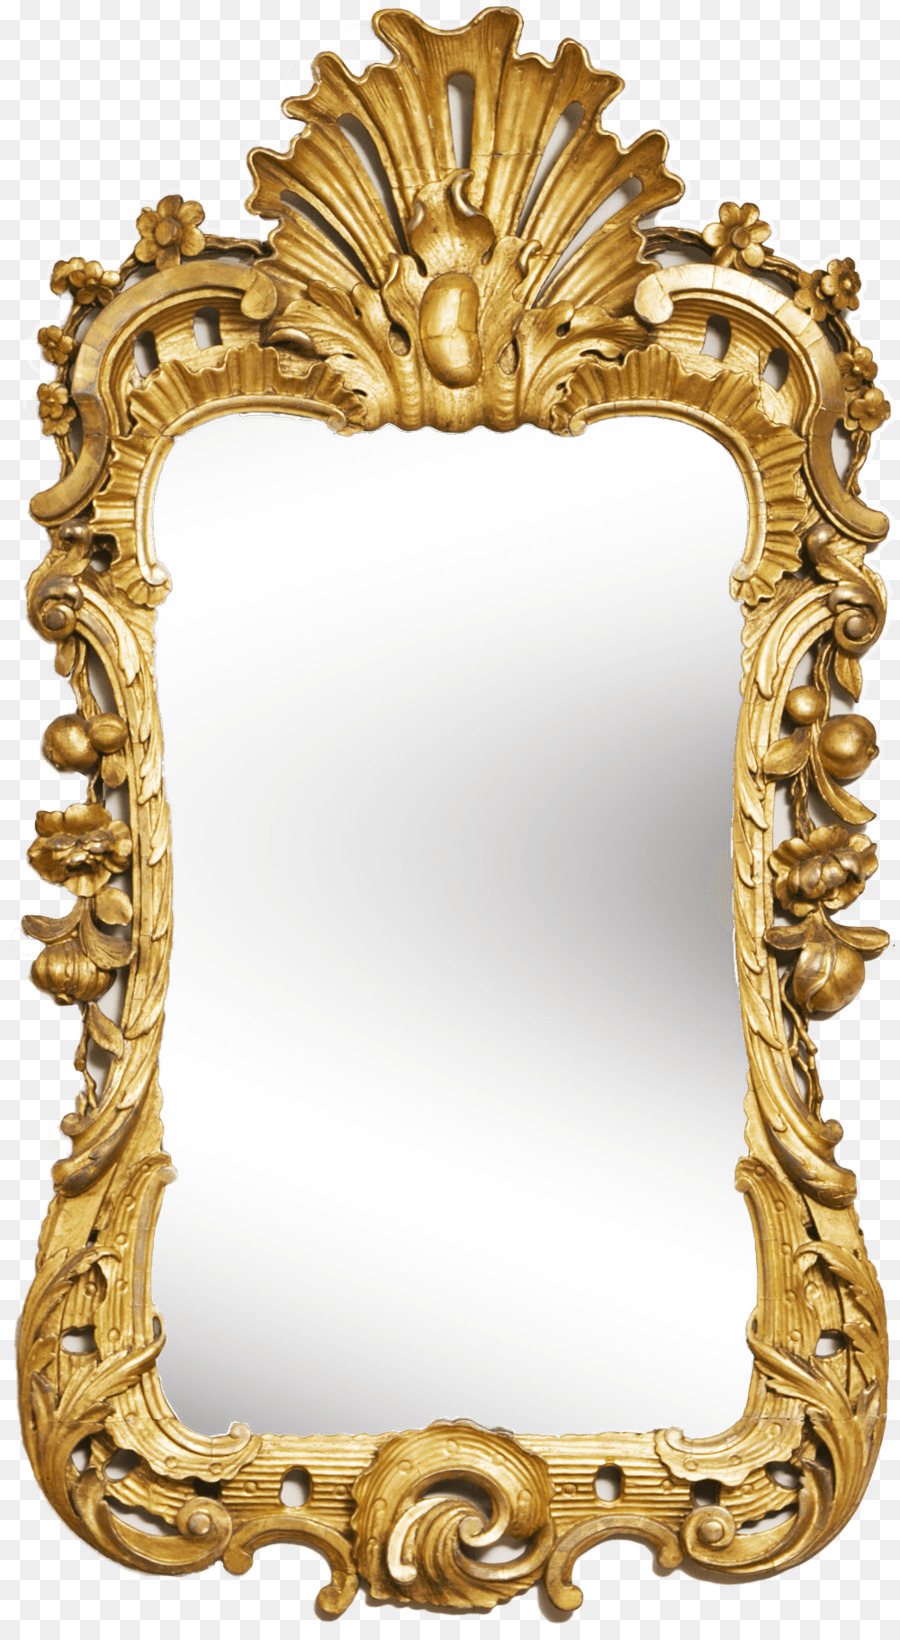 Mirror Clip art - European mirror png download - 1000*1809 - Free Transparent Mirror png Download.